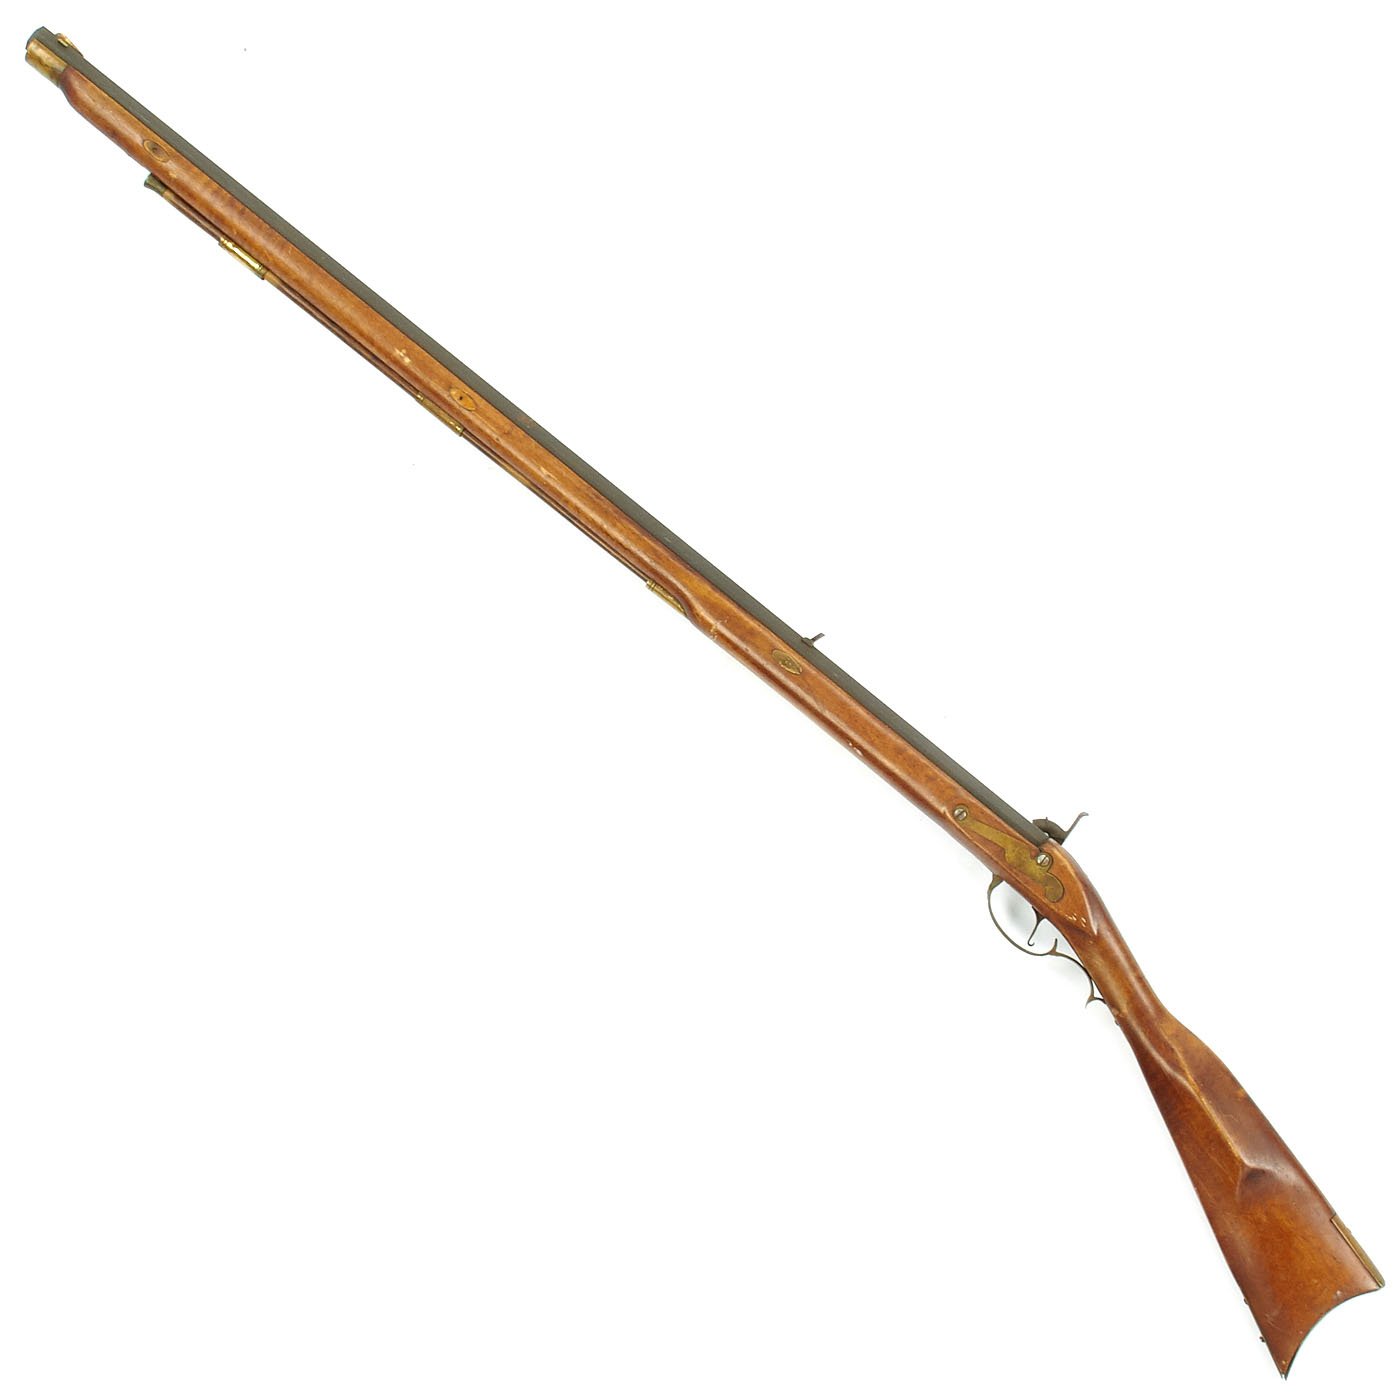 Original U.S. Percussion 50 cal Replica Kentucky Rifle - THE